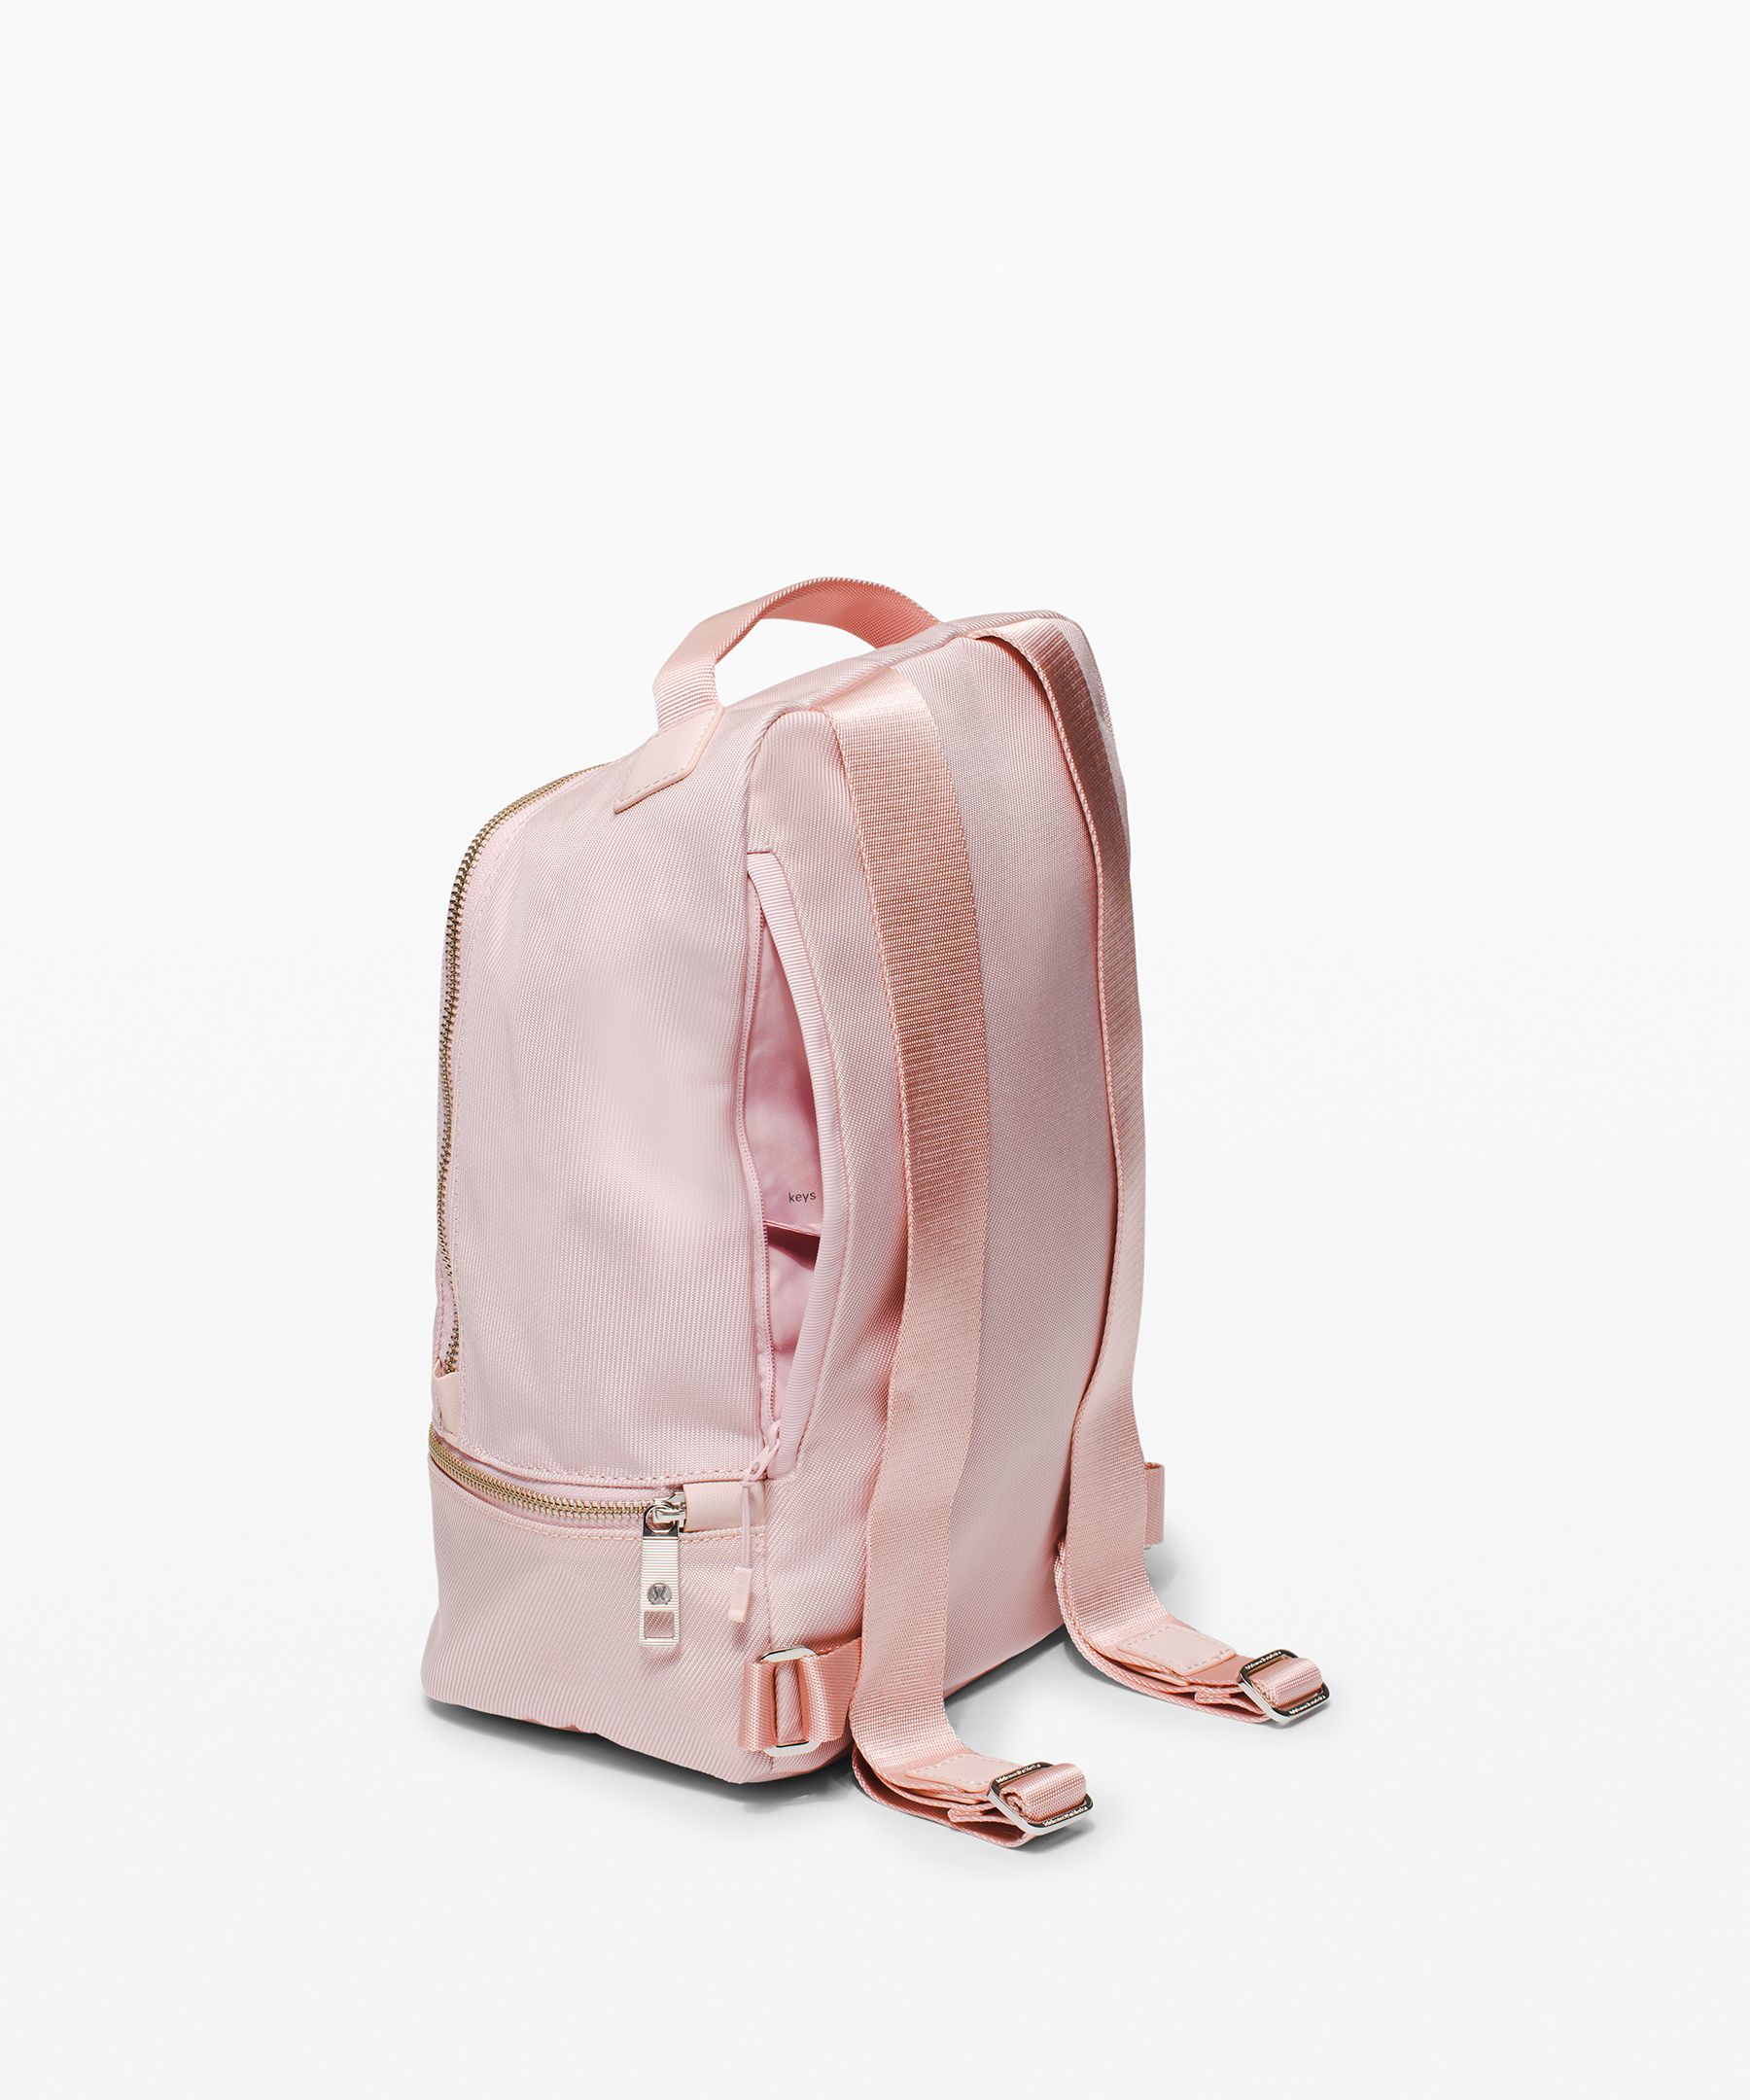 lululemon pink bag